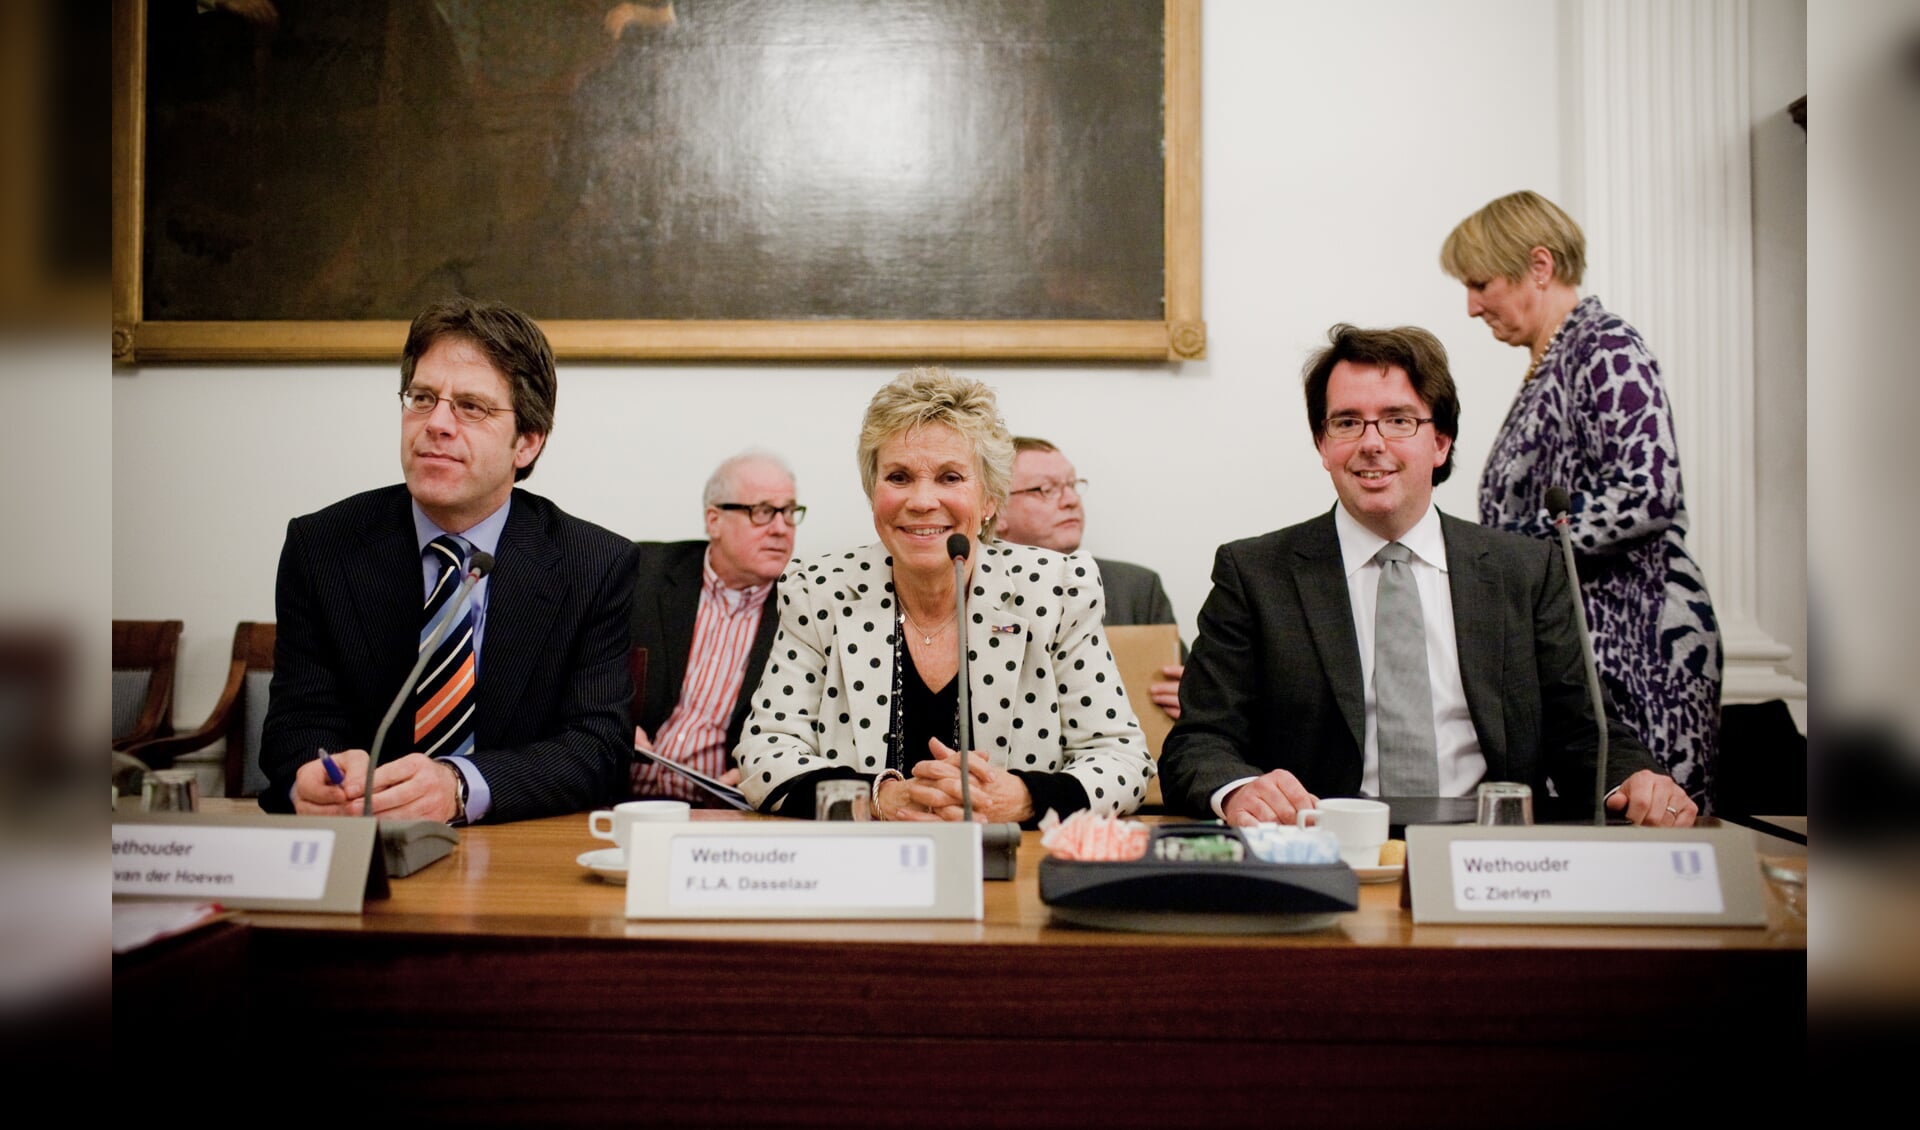 De wethouders van Weesp. V.l.n.r: Van der Hoeven, Dasselaar en Zierleyn